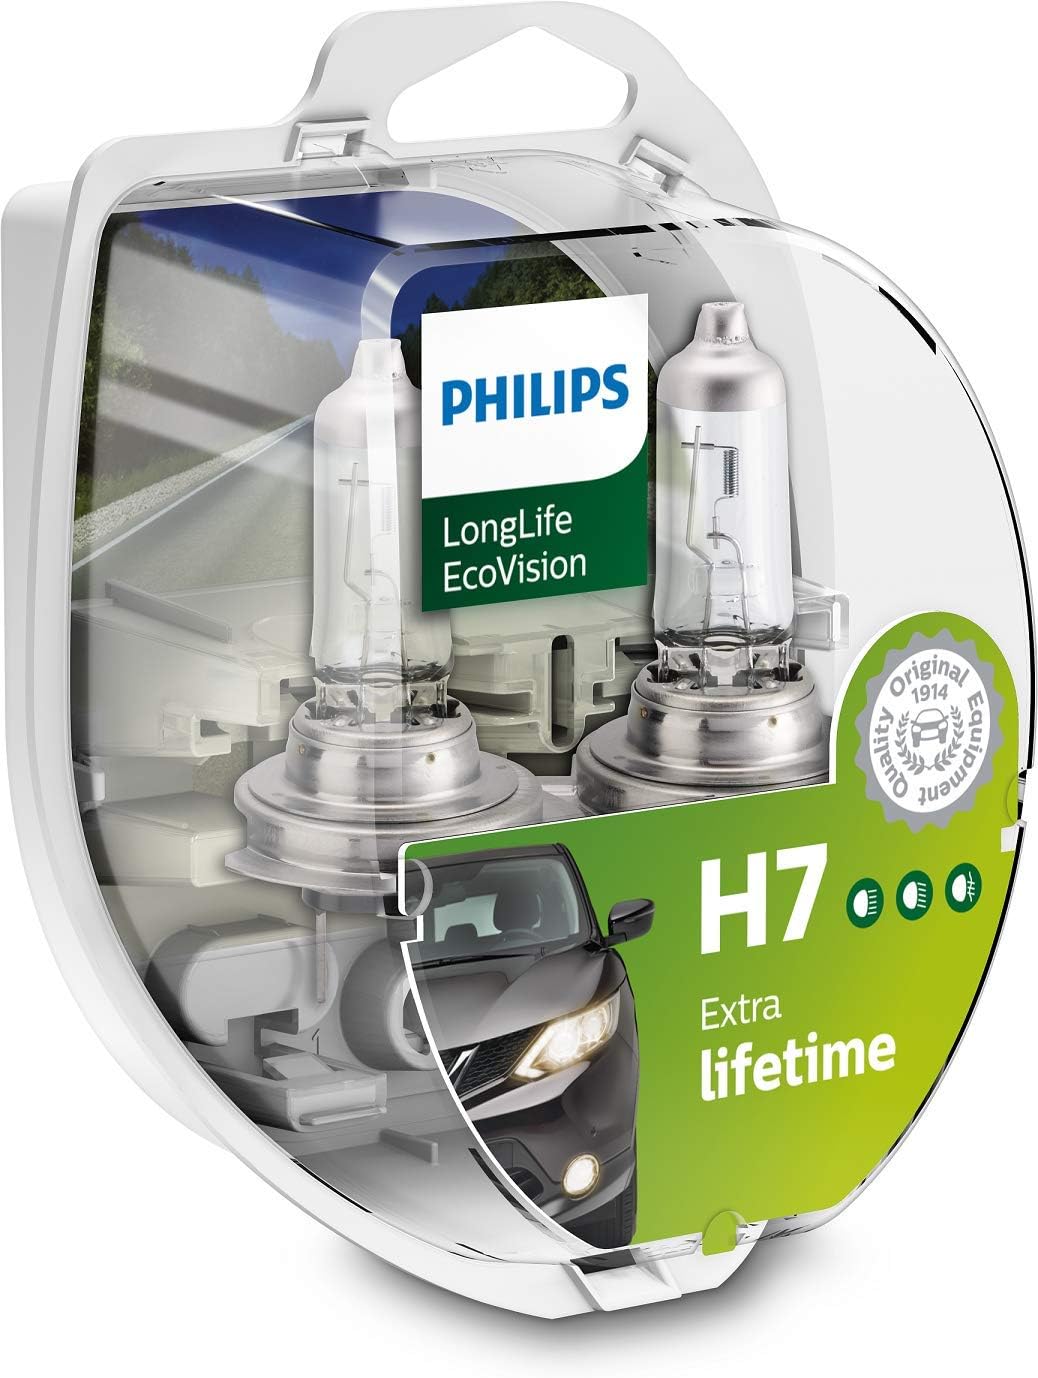 Philips LongLife EcoVision, RacingVision, WhiteVision